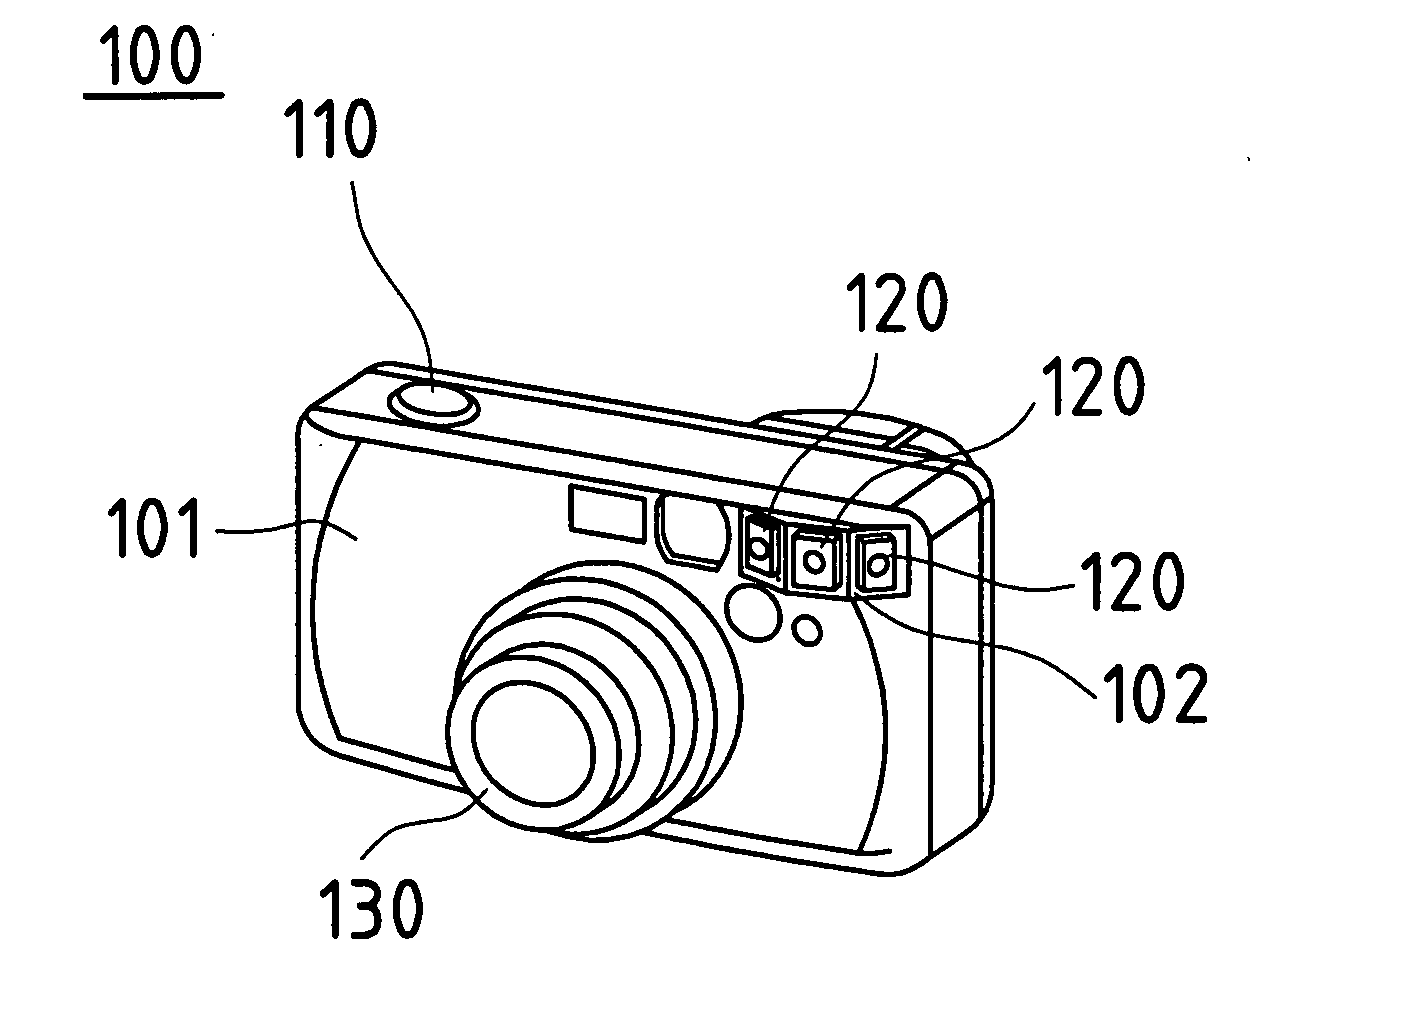 Image capturing device